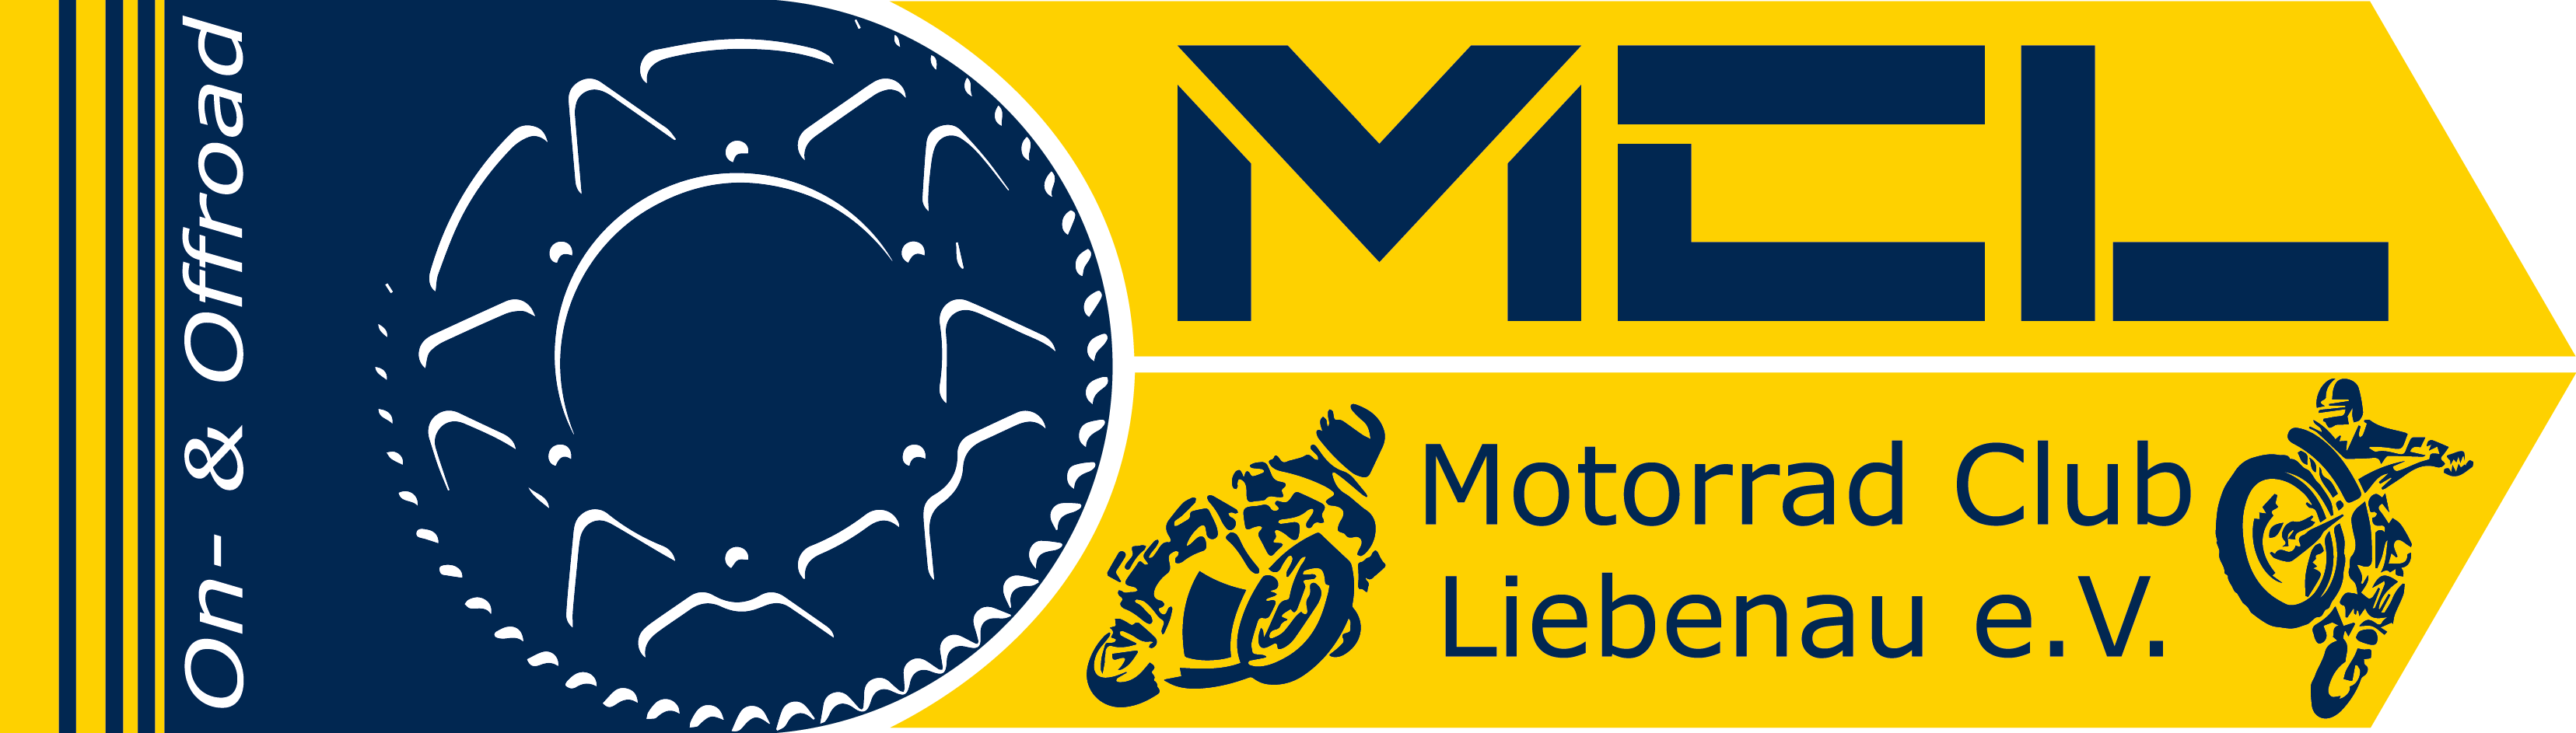 MCL Liebenau Logo Pfad rechts